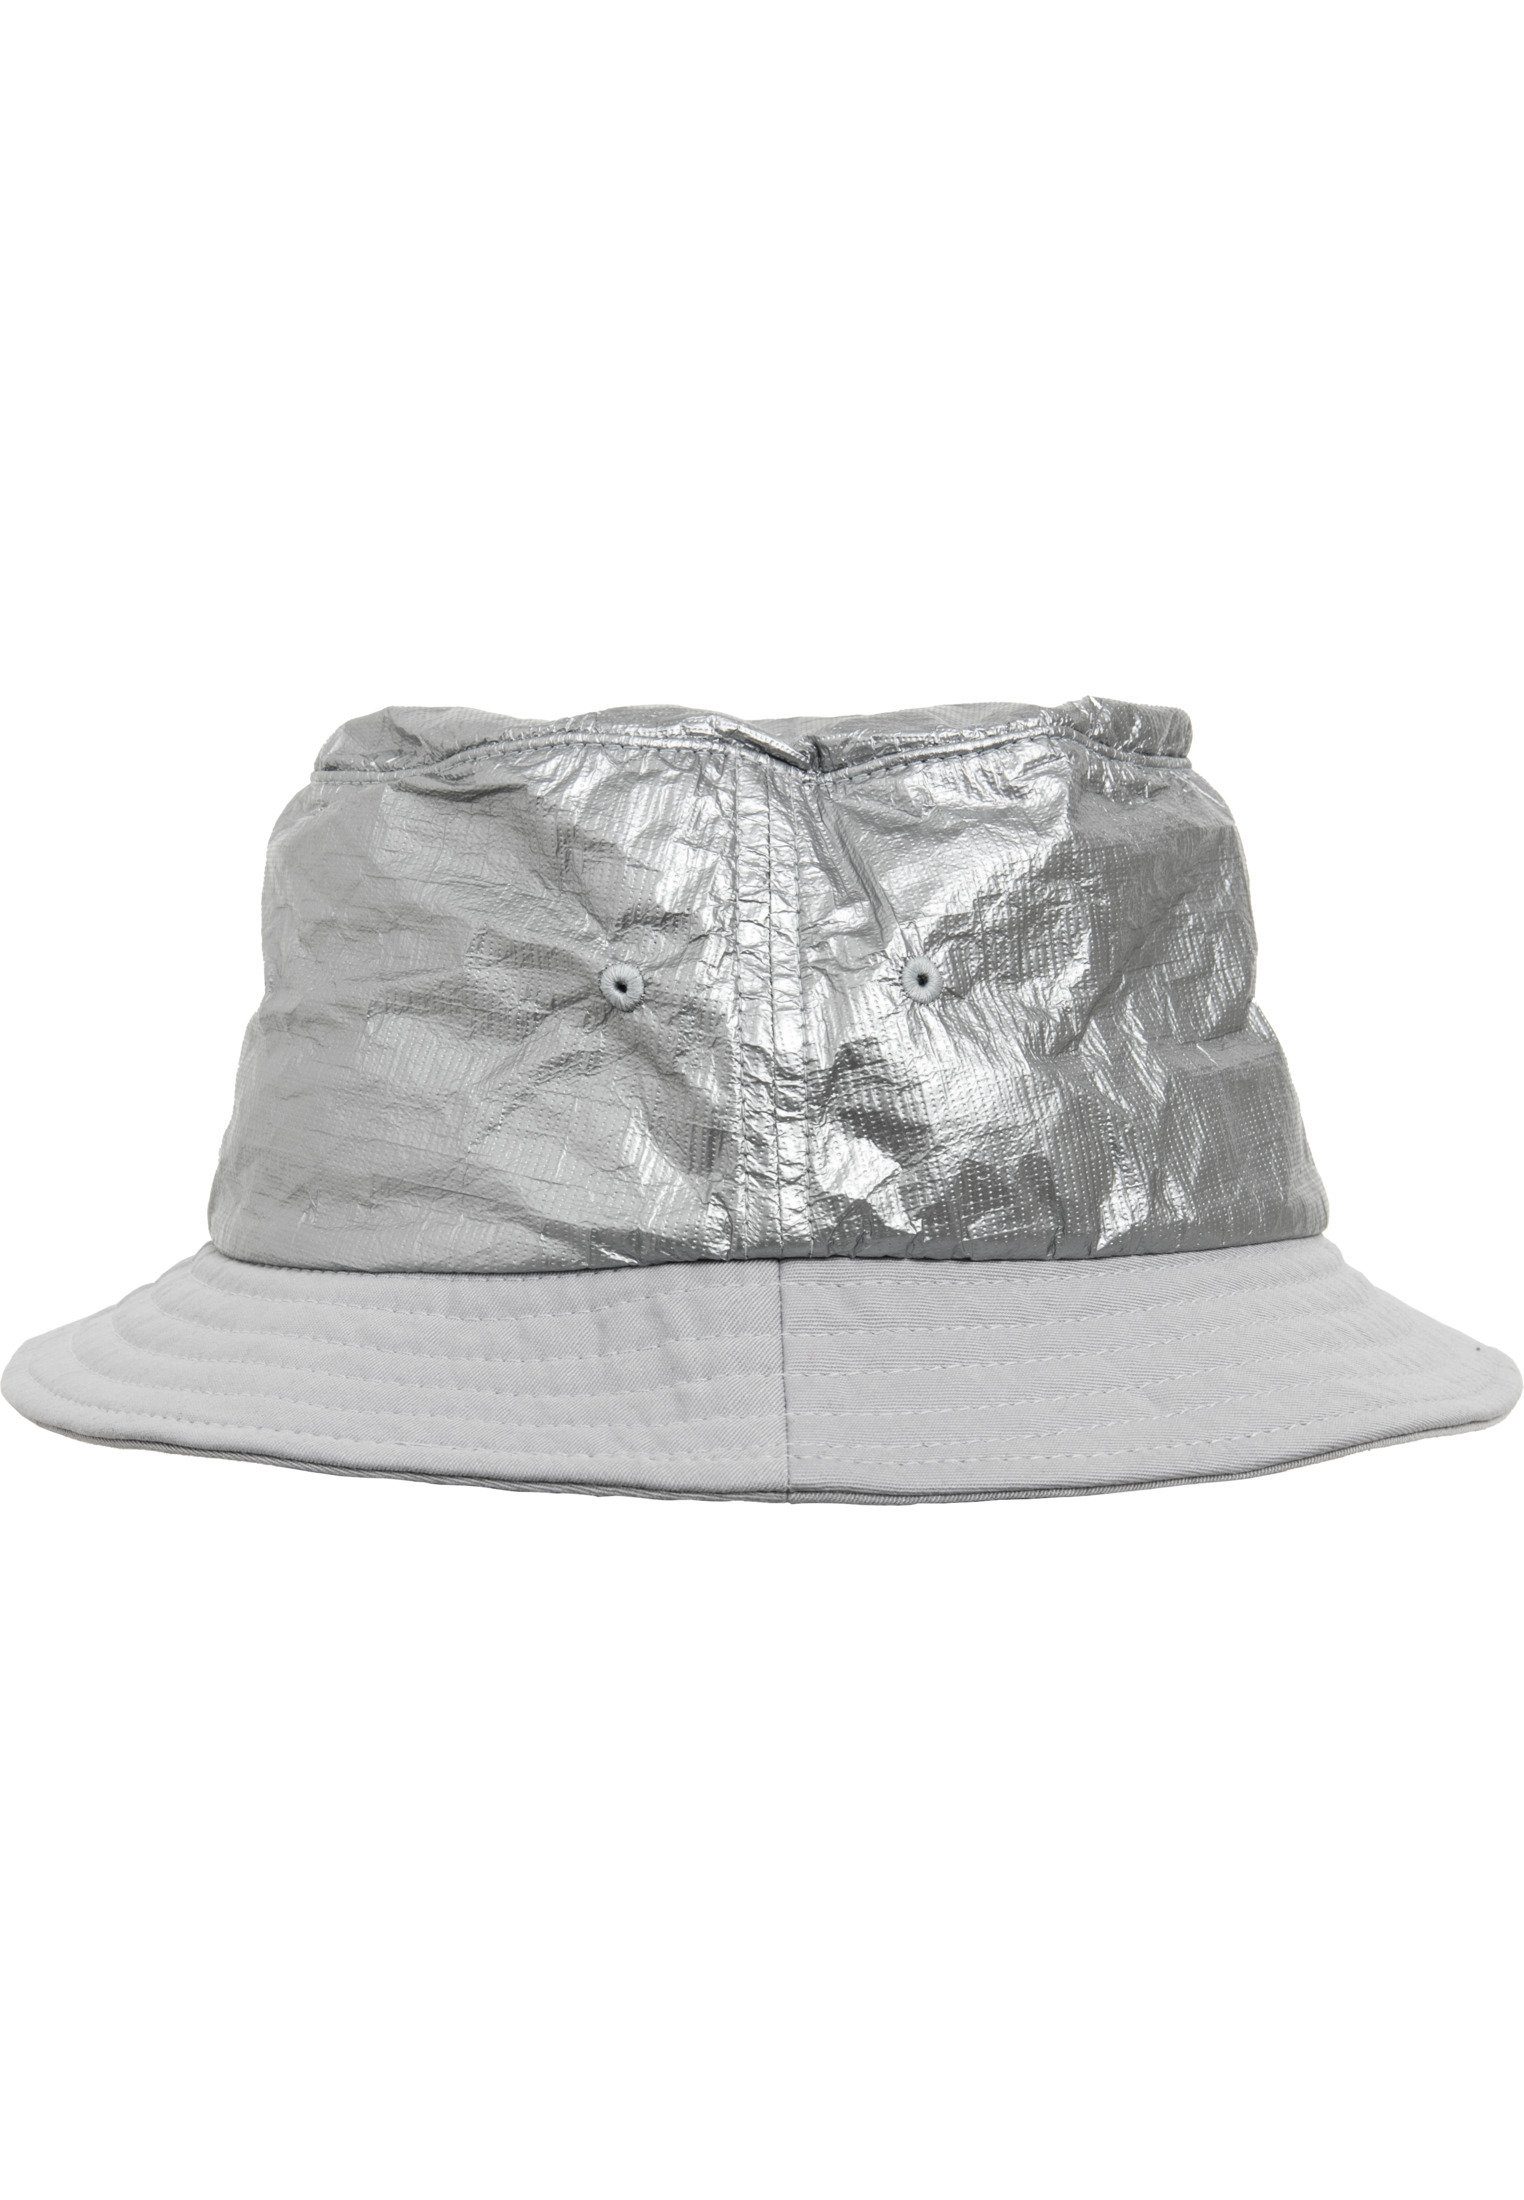 Flex Hat Bucket Hat Crinkled Flexfit Cap silver Bucket Paper